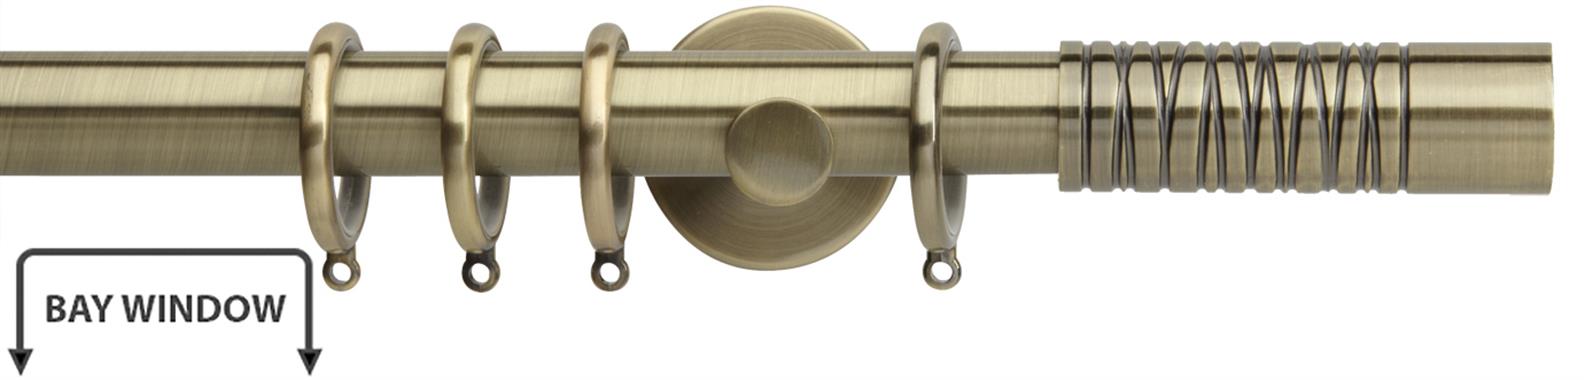 Neo Premium 28mm Bay Window Pole Spun Brass Wired Barrel